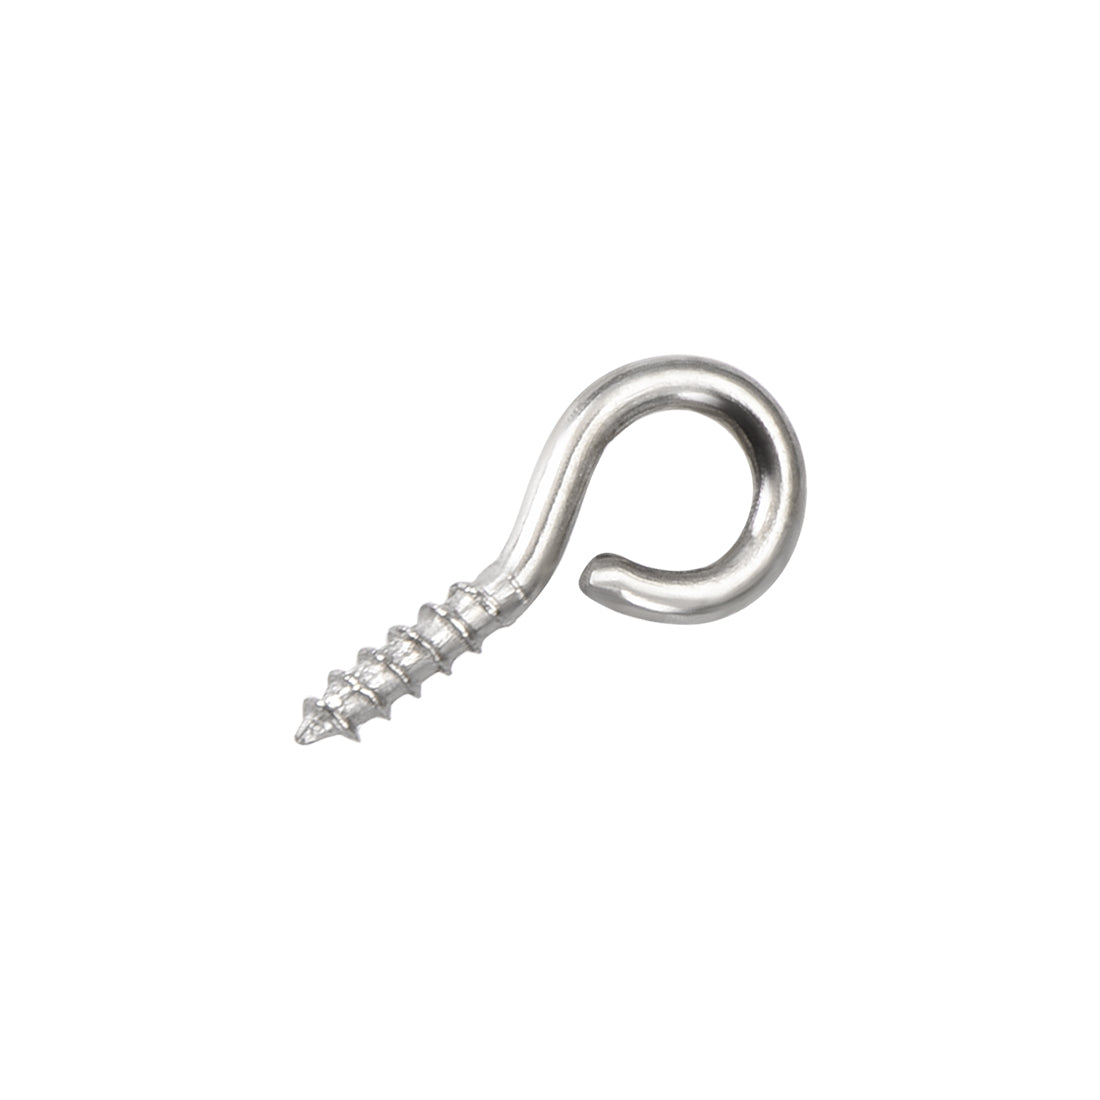 uxcell Uxcell 0.59" Small Screw Eye Hooks Self Tapping Screws Carbon Steel Screw-in Hanger Eye-Shape Ring Hooks Silver 100pcs